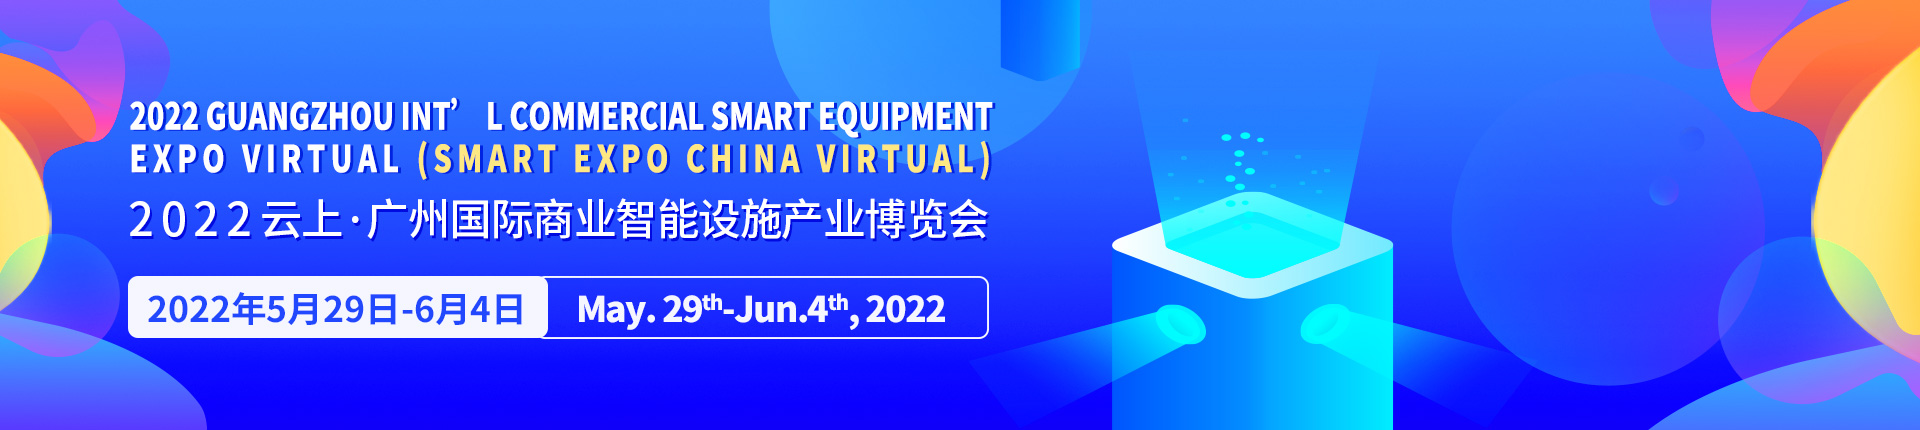 2022 Guangzhou Int'l Commercial Smart Equipment Expo Virtual (Smart Expo China Virtual)